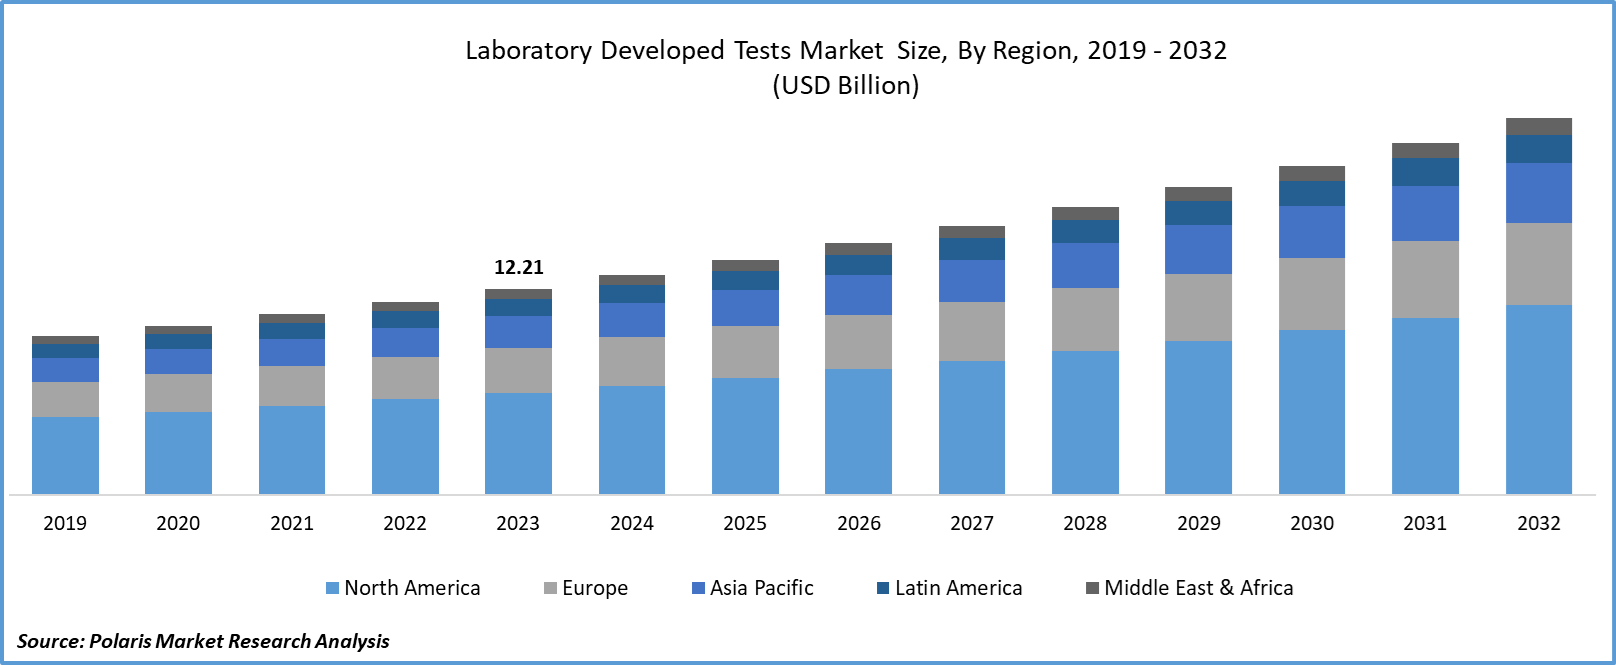 Laboratory Developed Tests Market Size